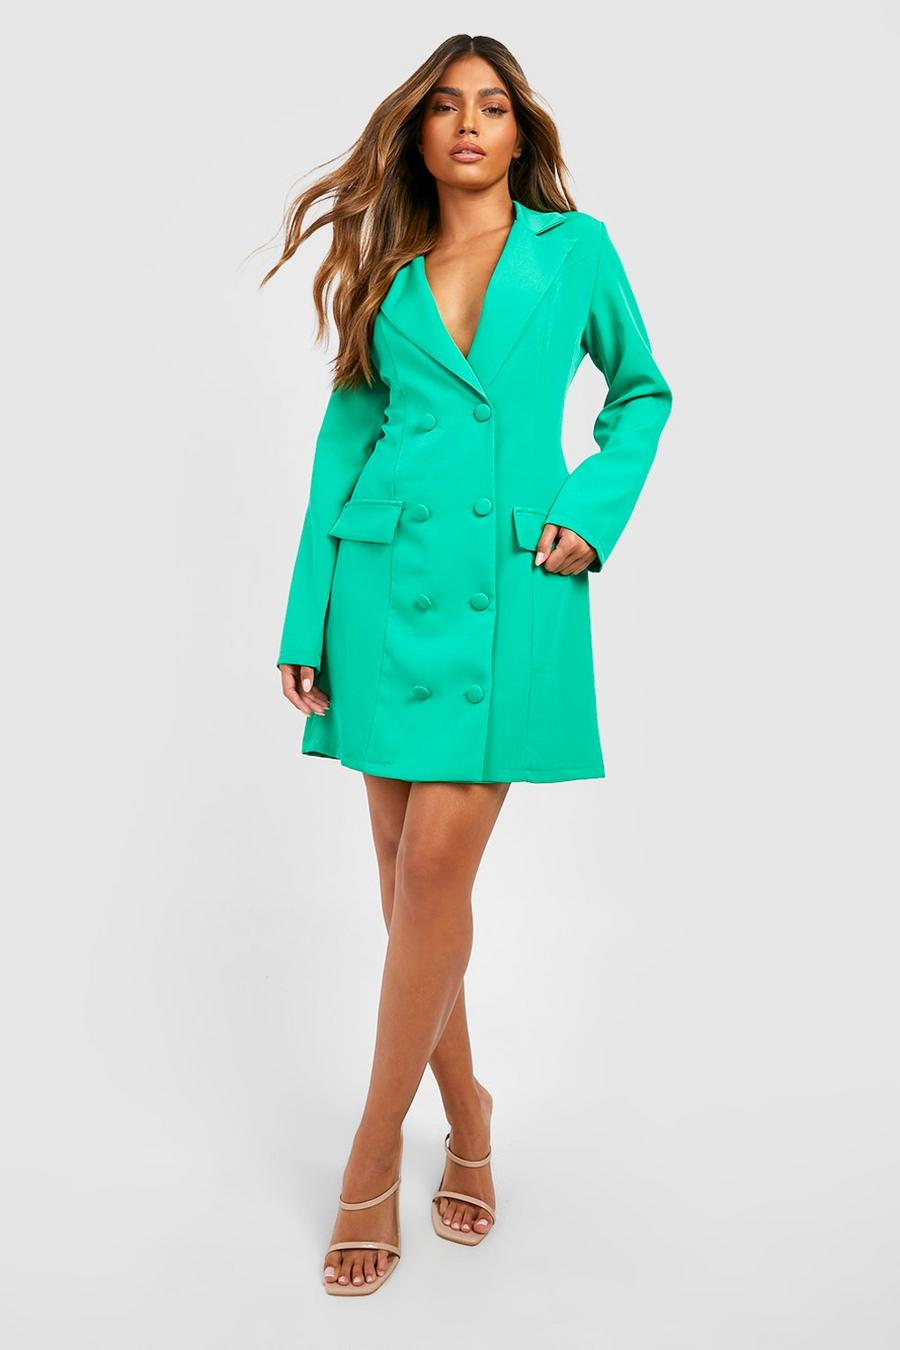 Bright green vert Lace Up Back Tailored Blazer Dress